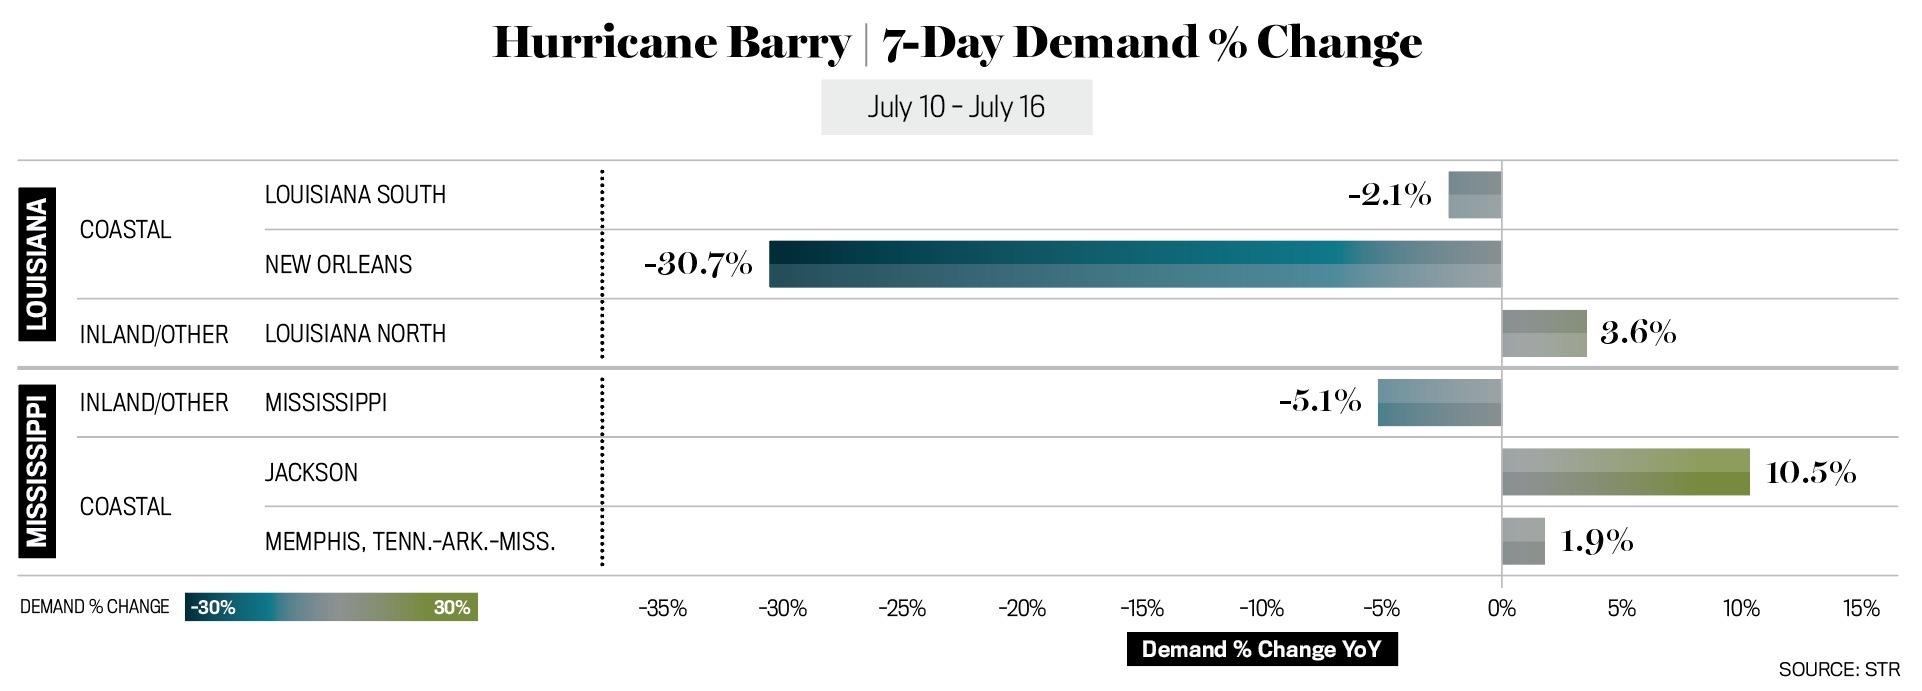 Hurricane Barry Seven-Day Demand Change